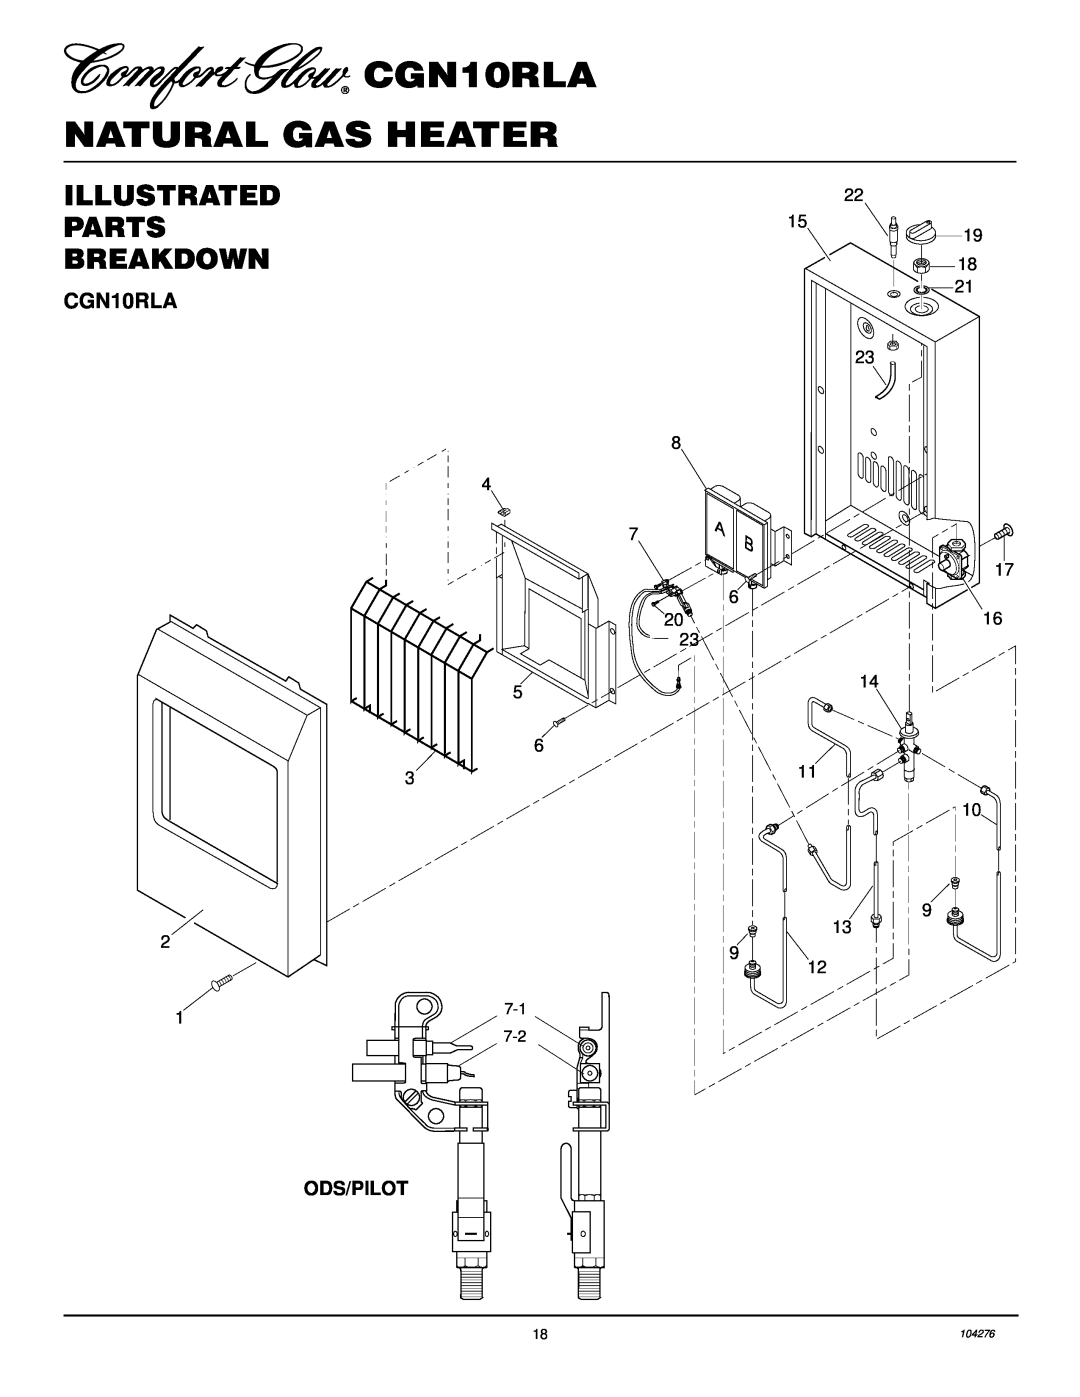 Desa installation manual Illustrated Parts Breakdown, CGN10RLA NATURAL GAS HEATER, Ods/Pilot 